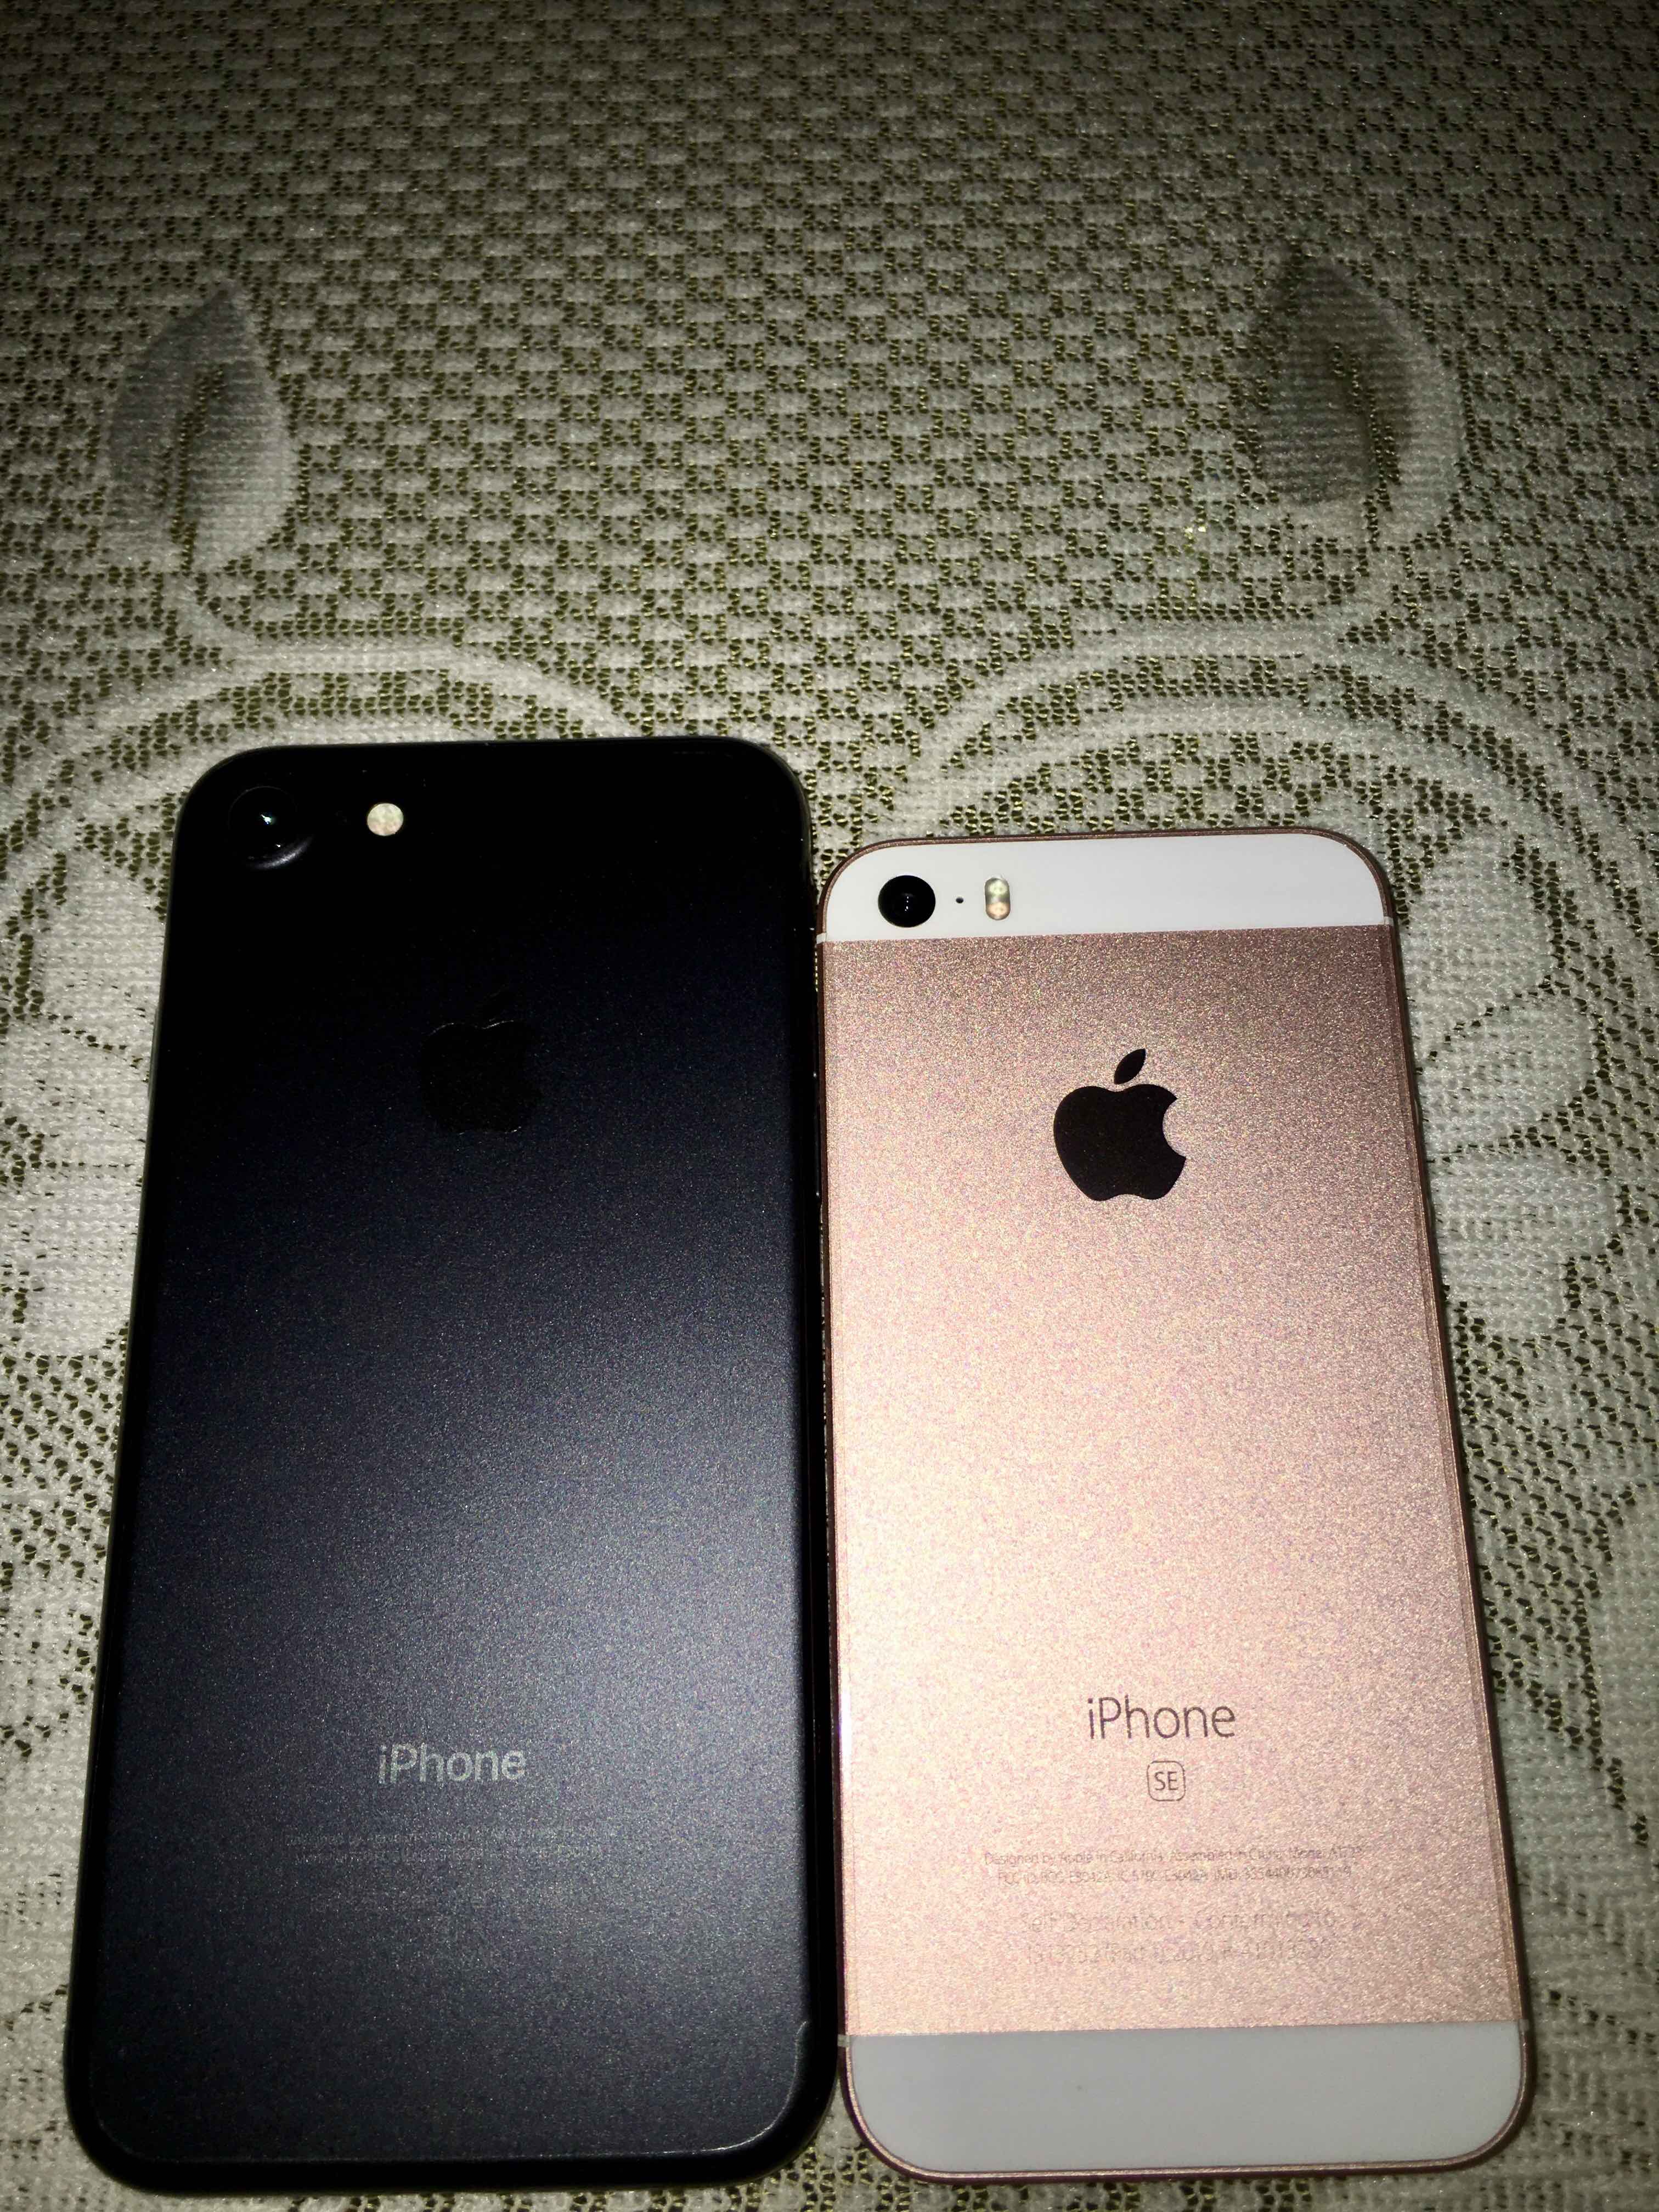 Keep iPhone 7 or iPhone SE?